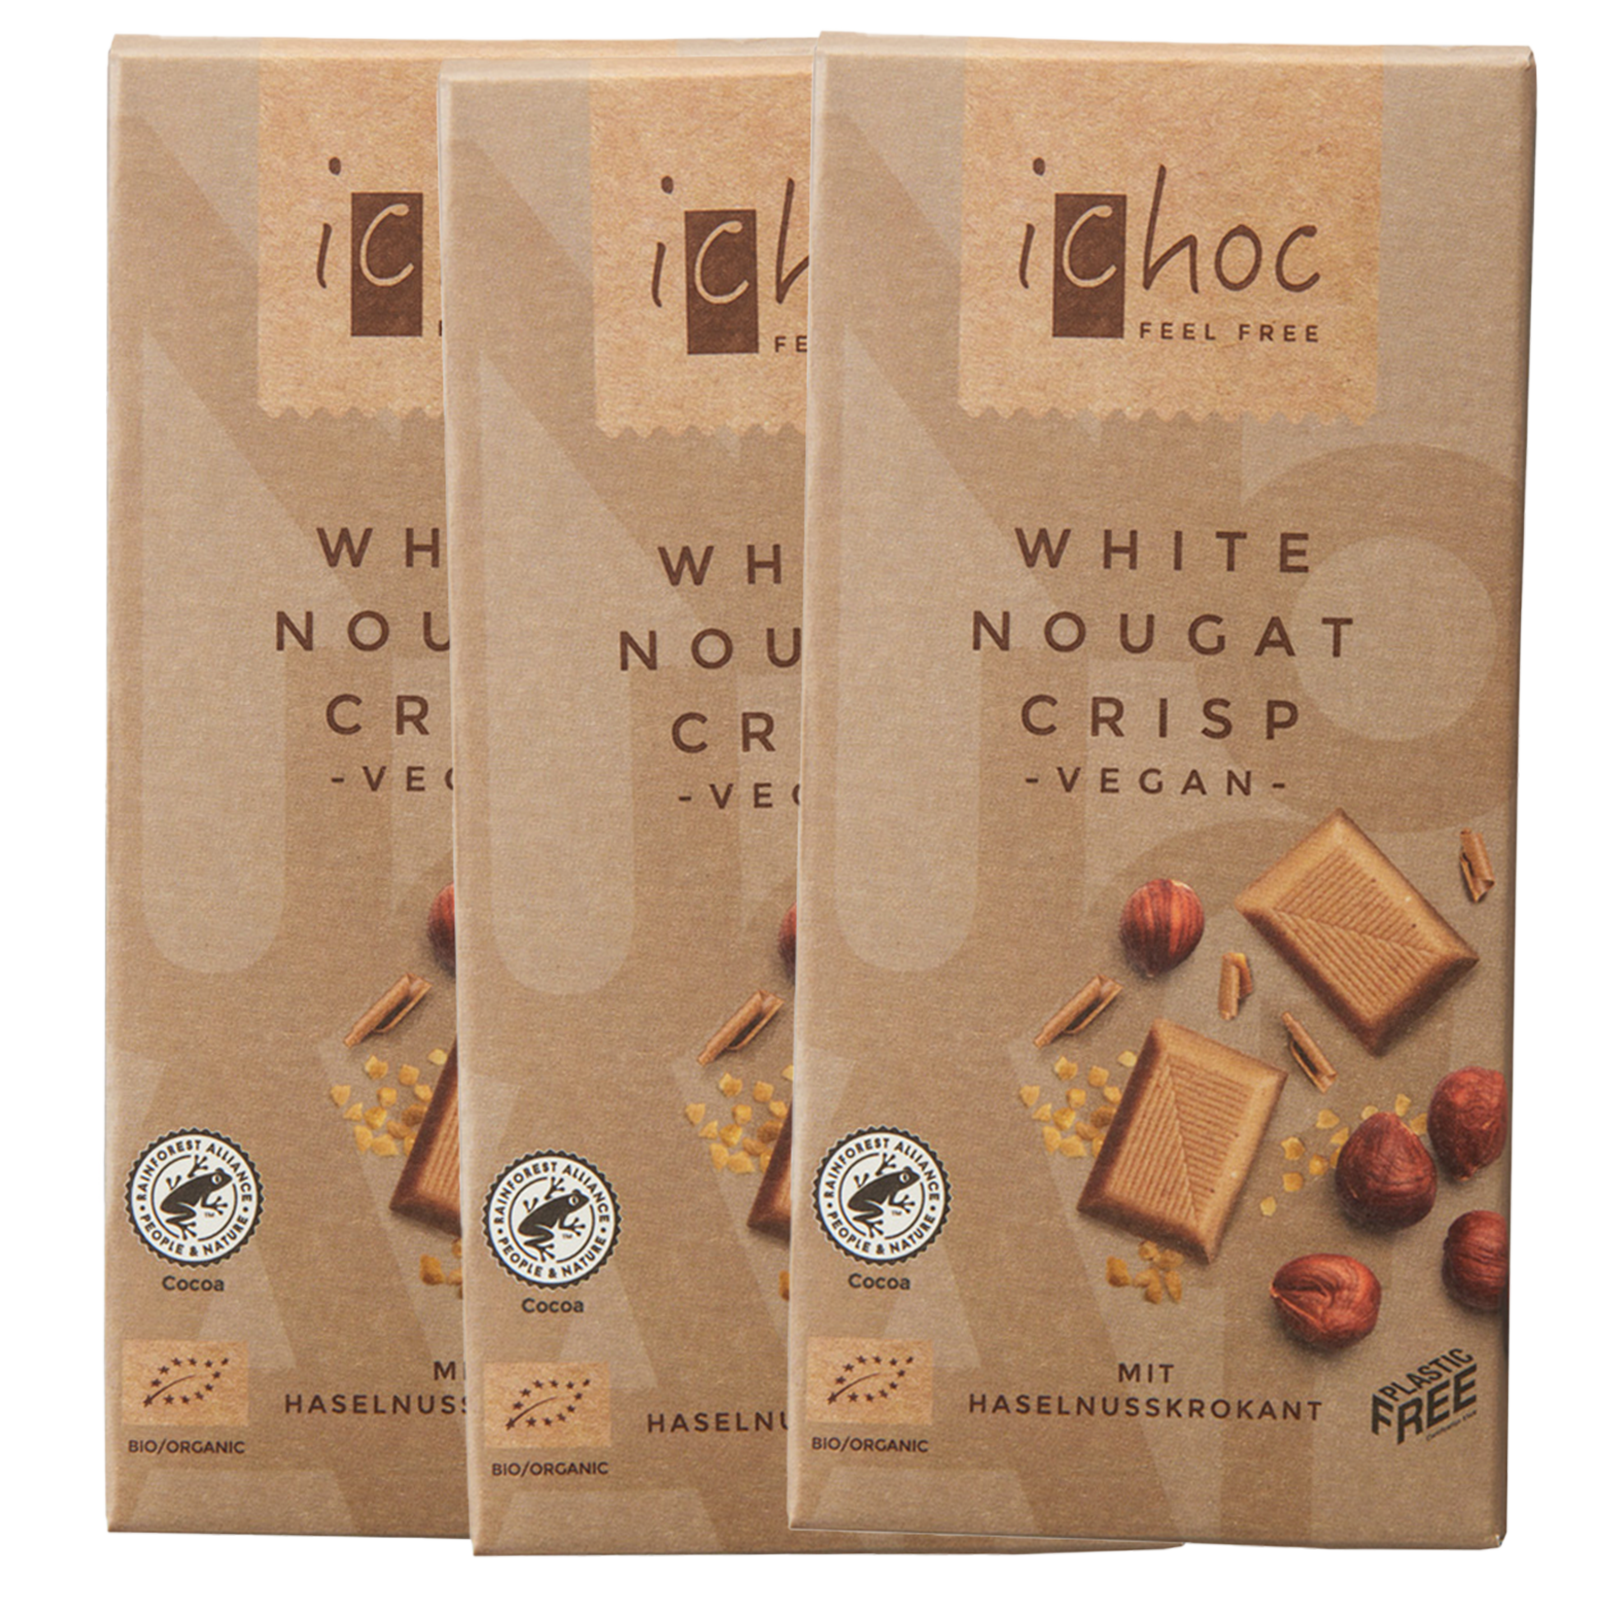 Certified Organic Dairy-Free Chocolate from Germany - White Nougat Crisp (3pc) - Horizon Farms